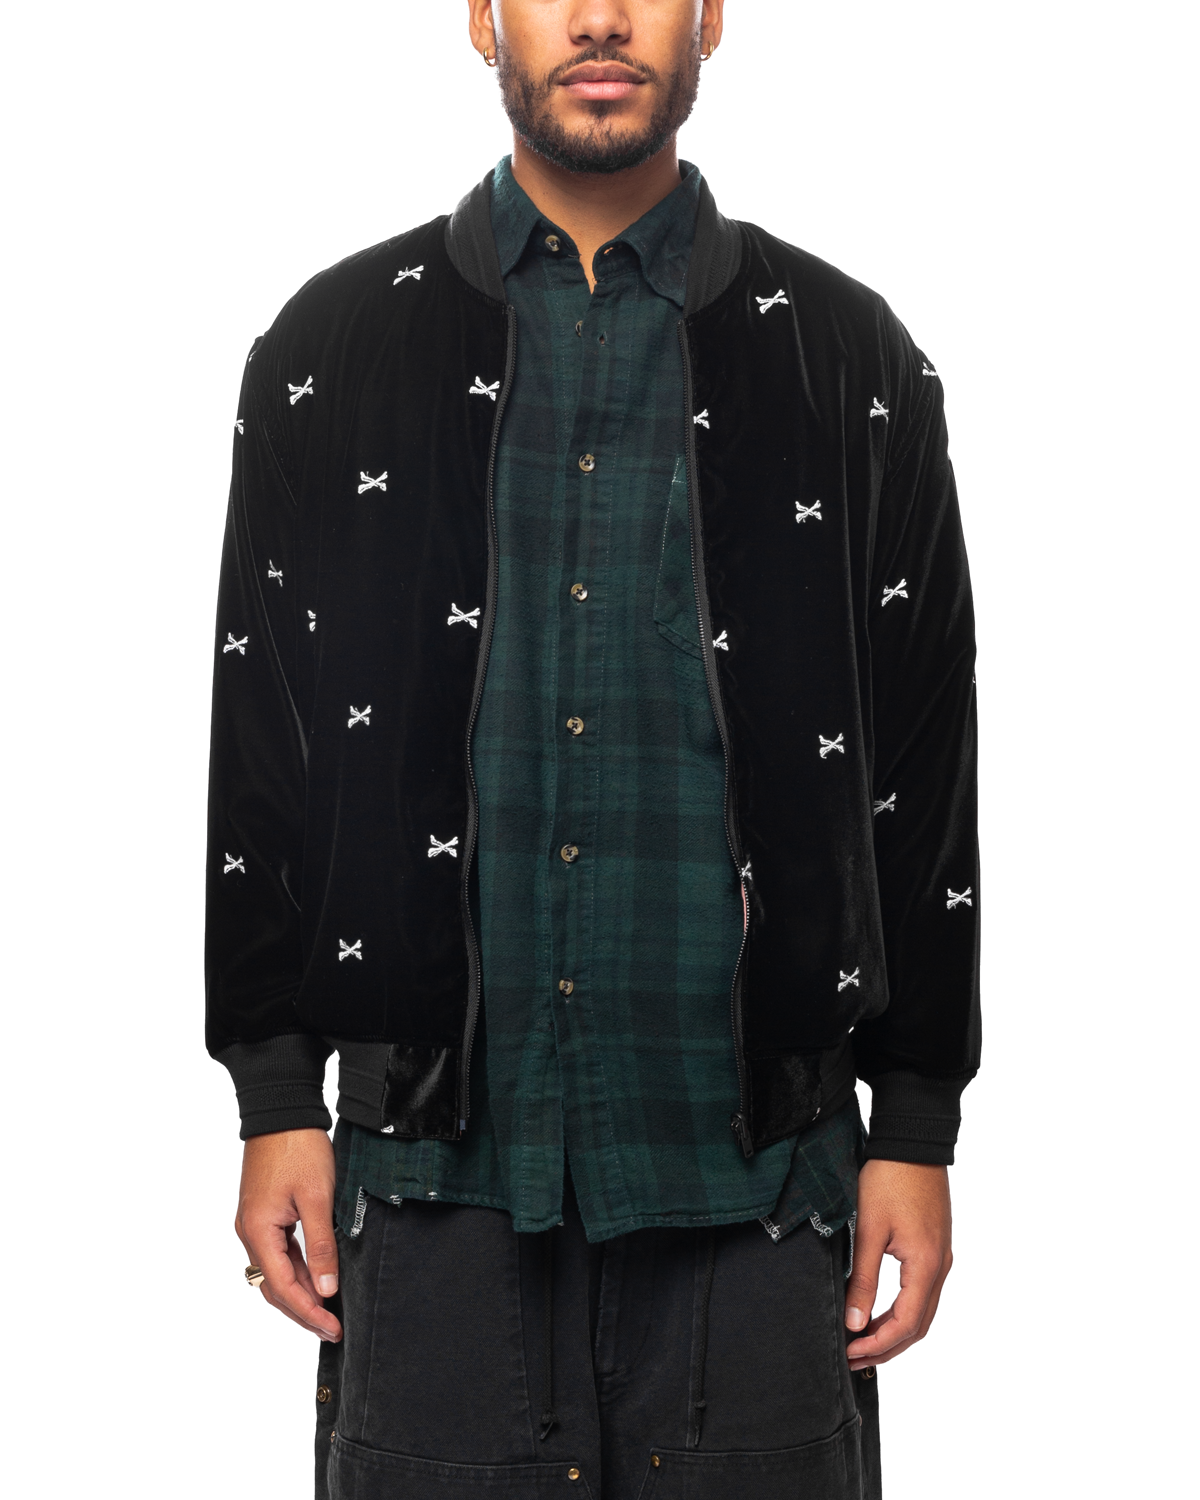 LC/Jacket/Poly. Textile Black